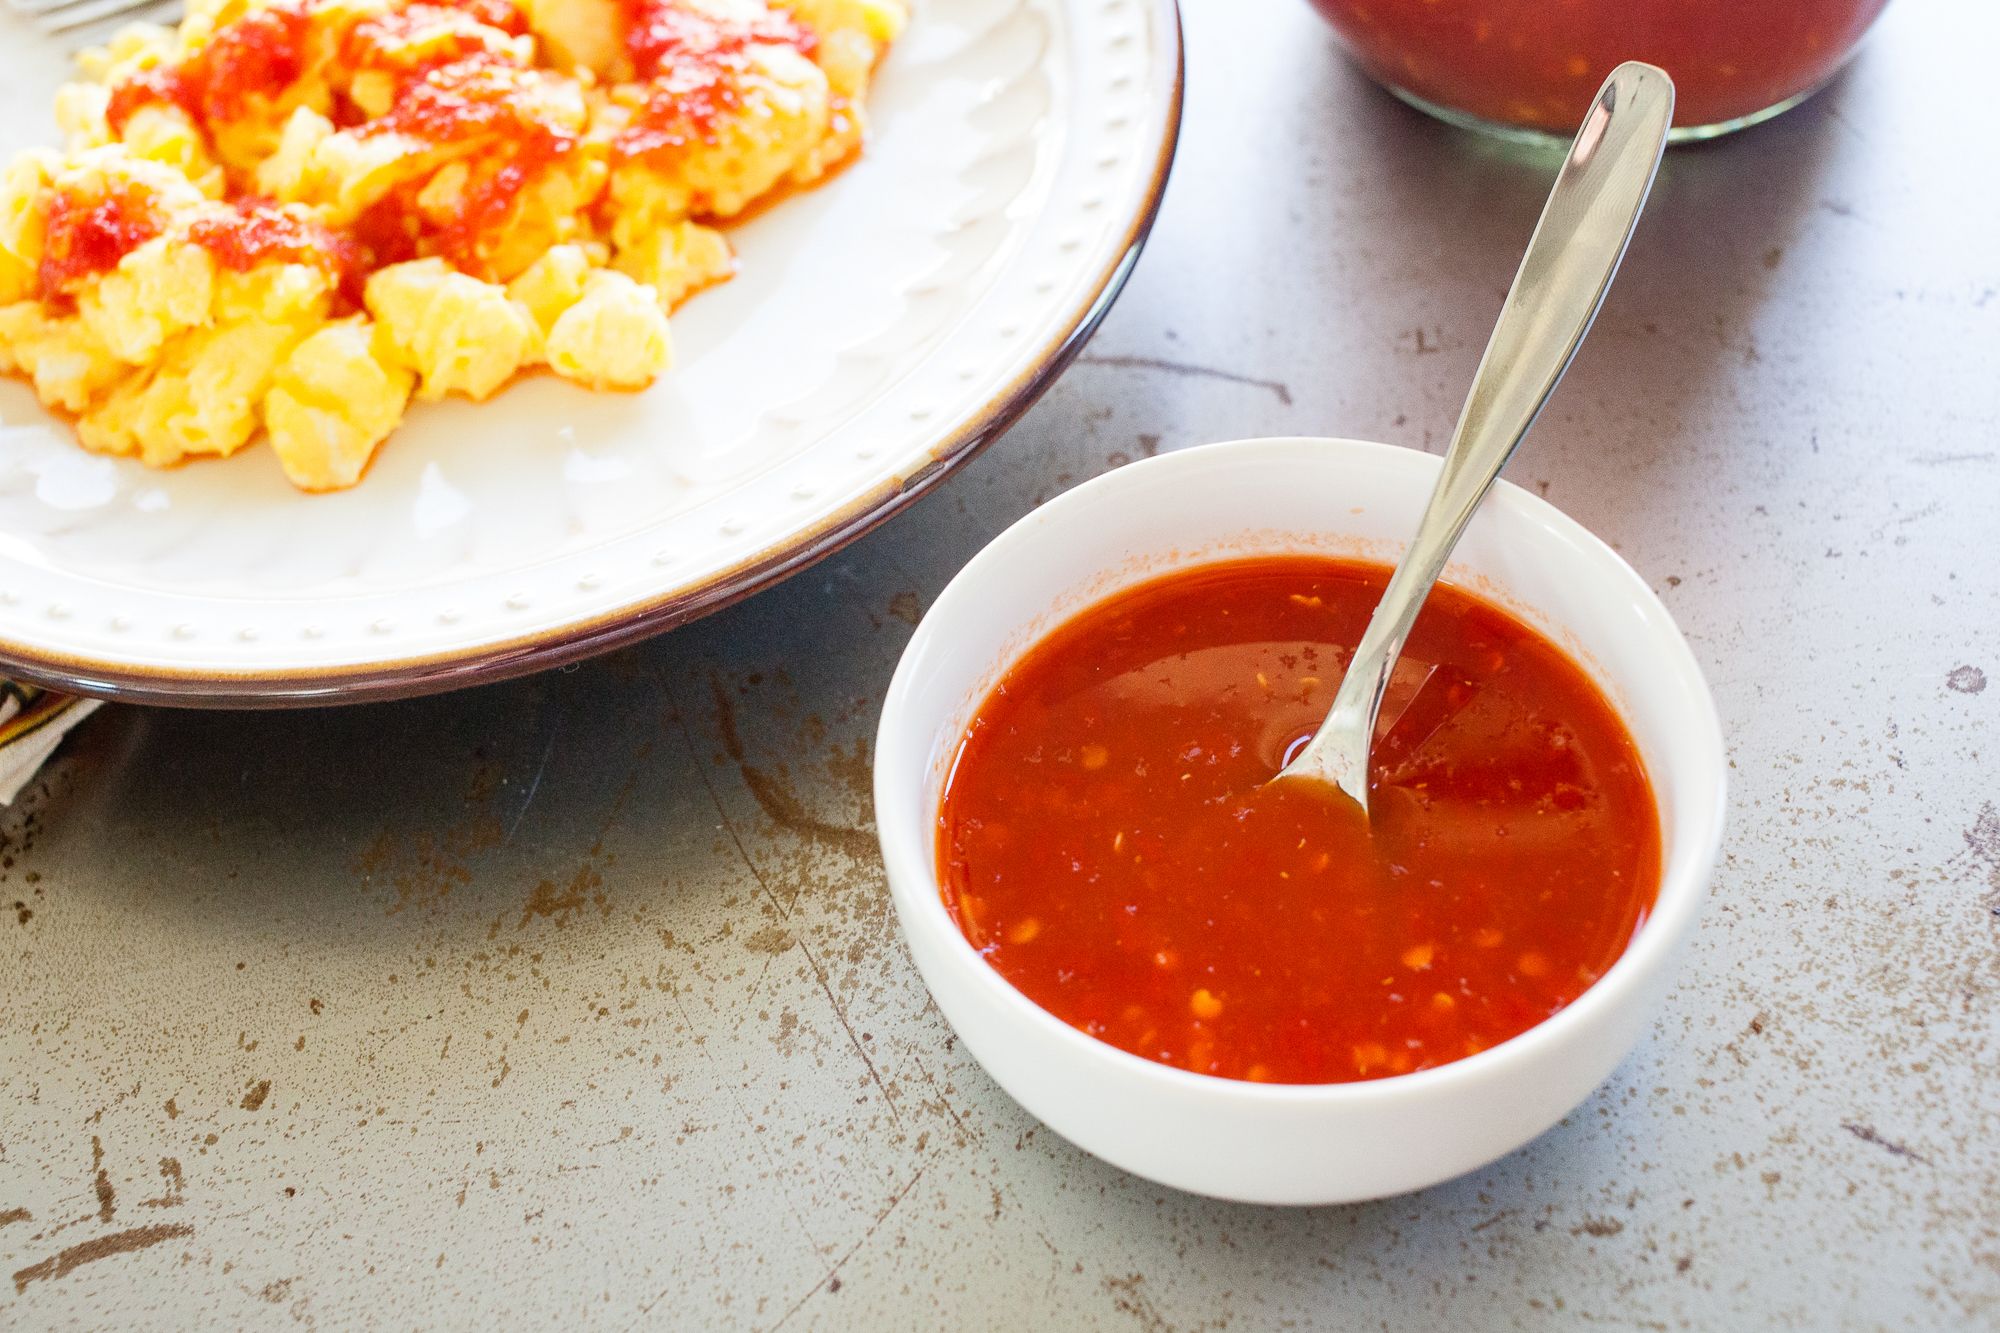 Homemade Hot Sauce Recipe - How to Make Hot Sauce